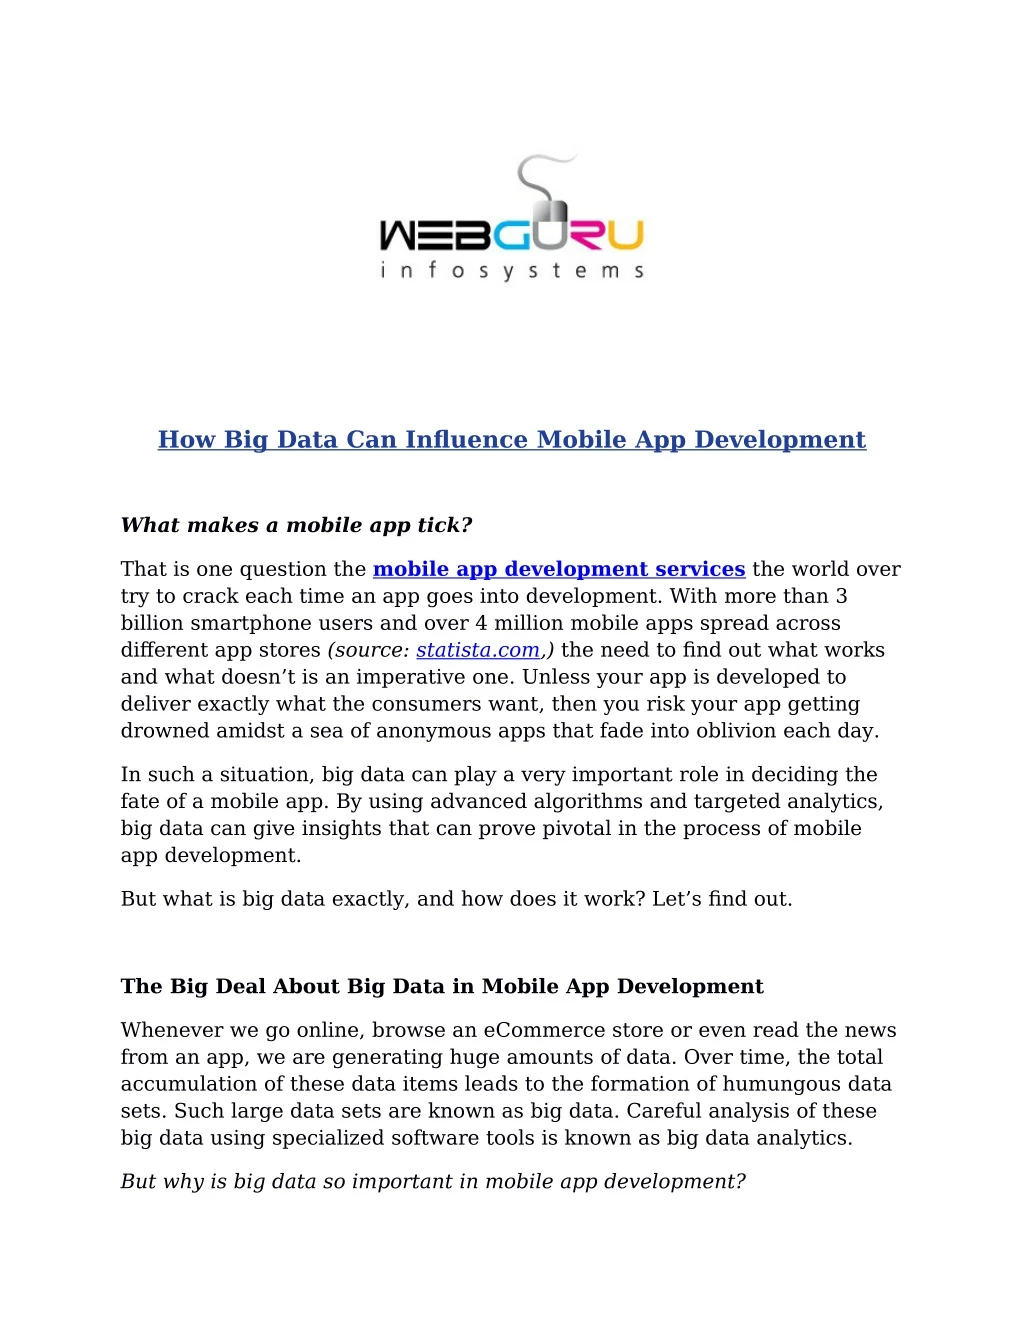 how big data can influence mobile app development